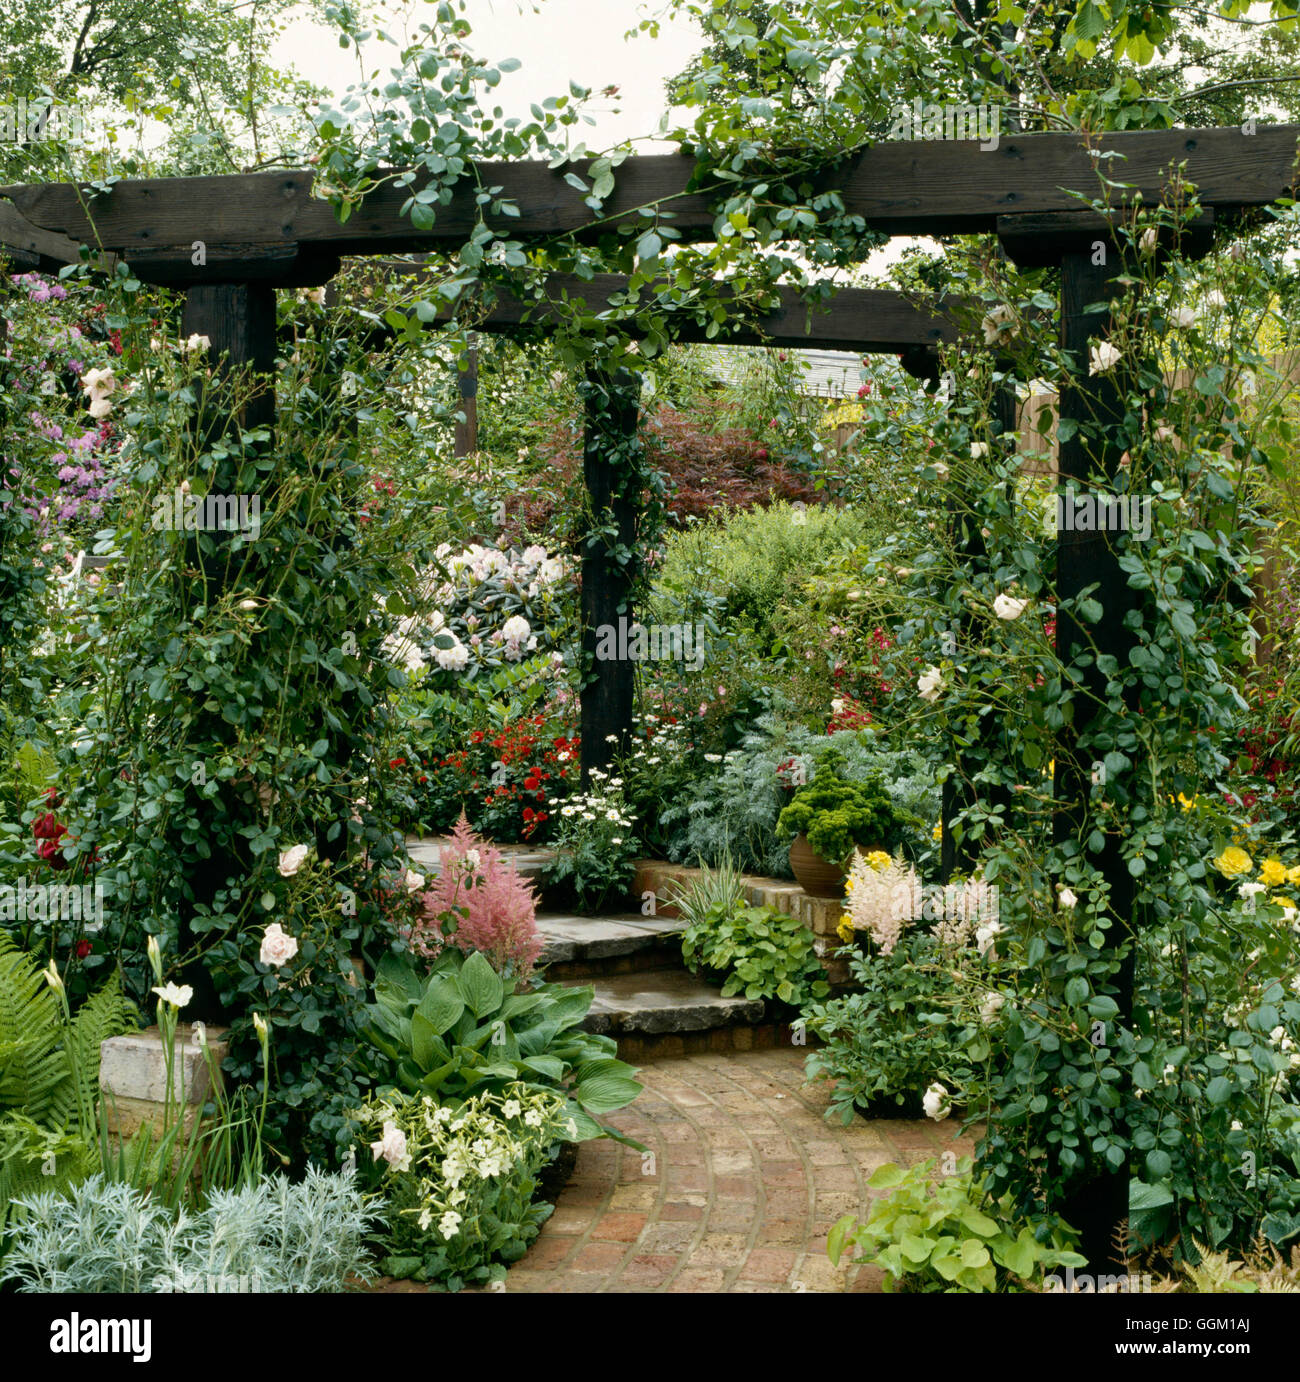 Pergola - Rosen mit reichen Voranbau PEG022691 Stockfotografie - Alamy